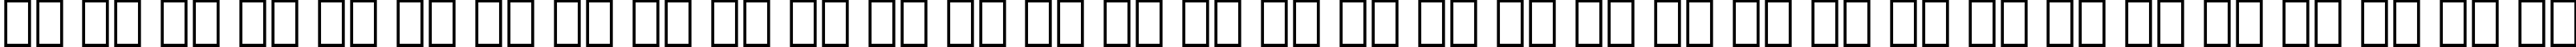 Пример написания русского алфавита шрифтом Latin 725 Bold Italic BT